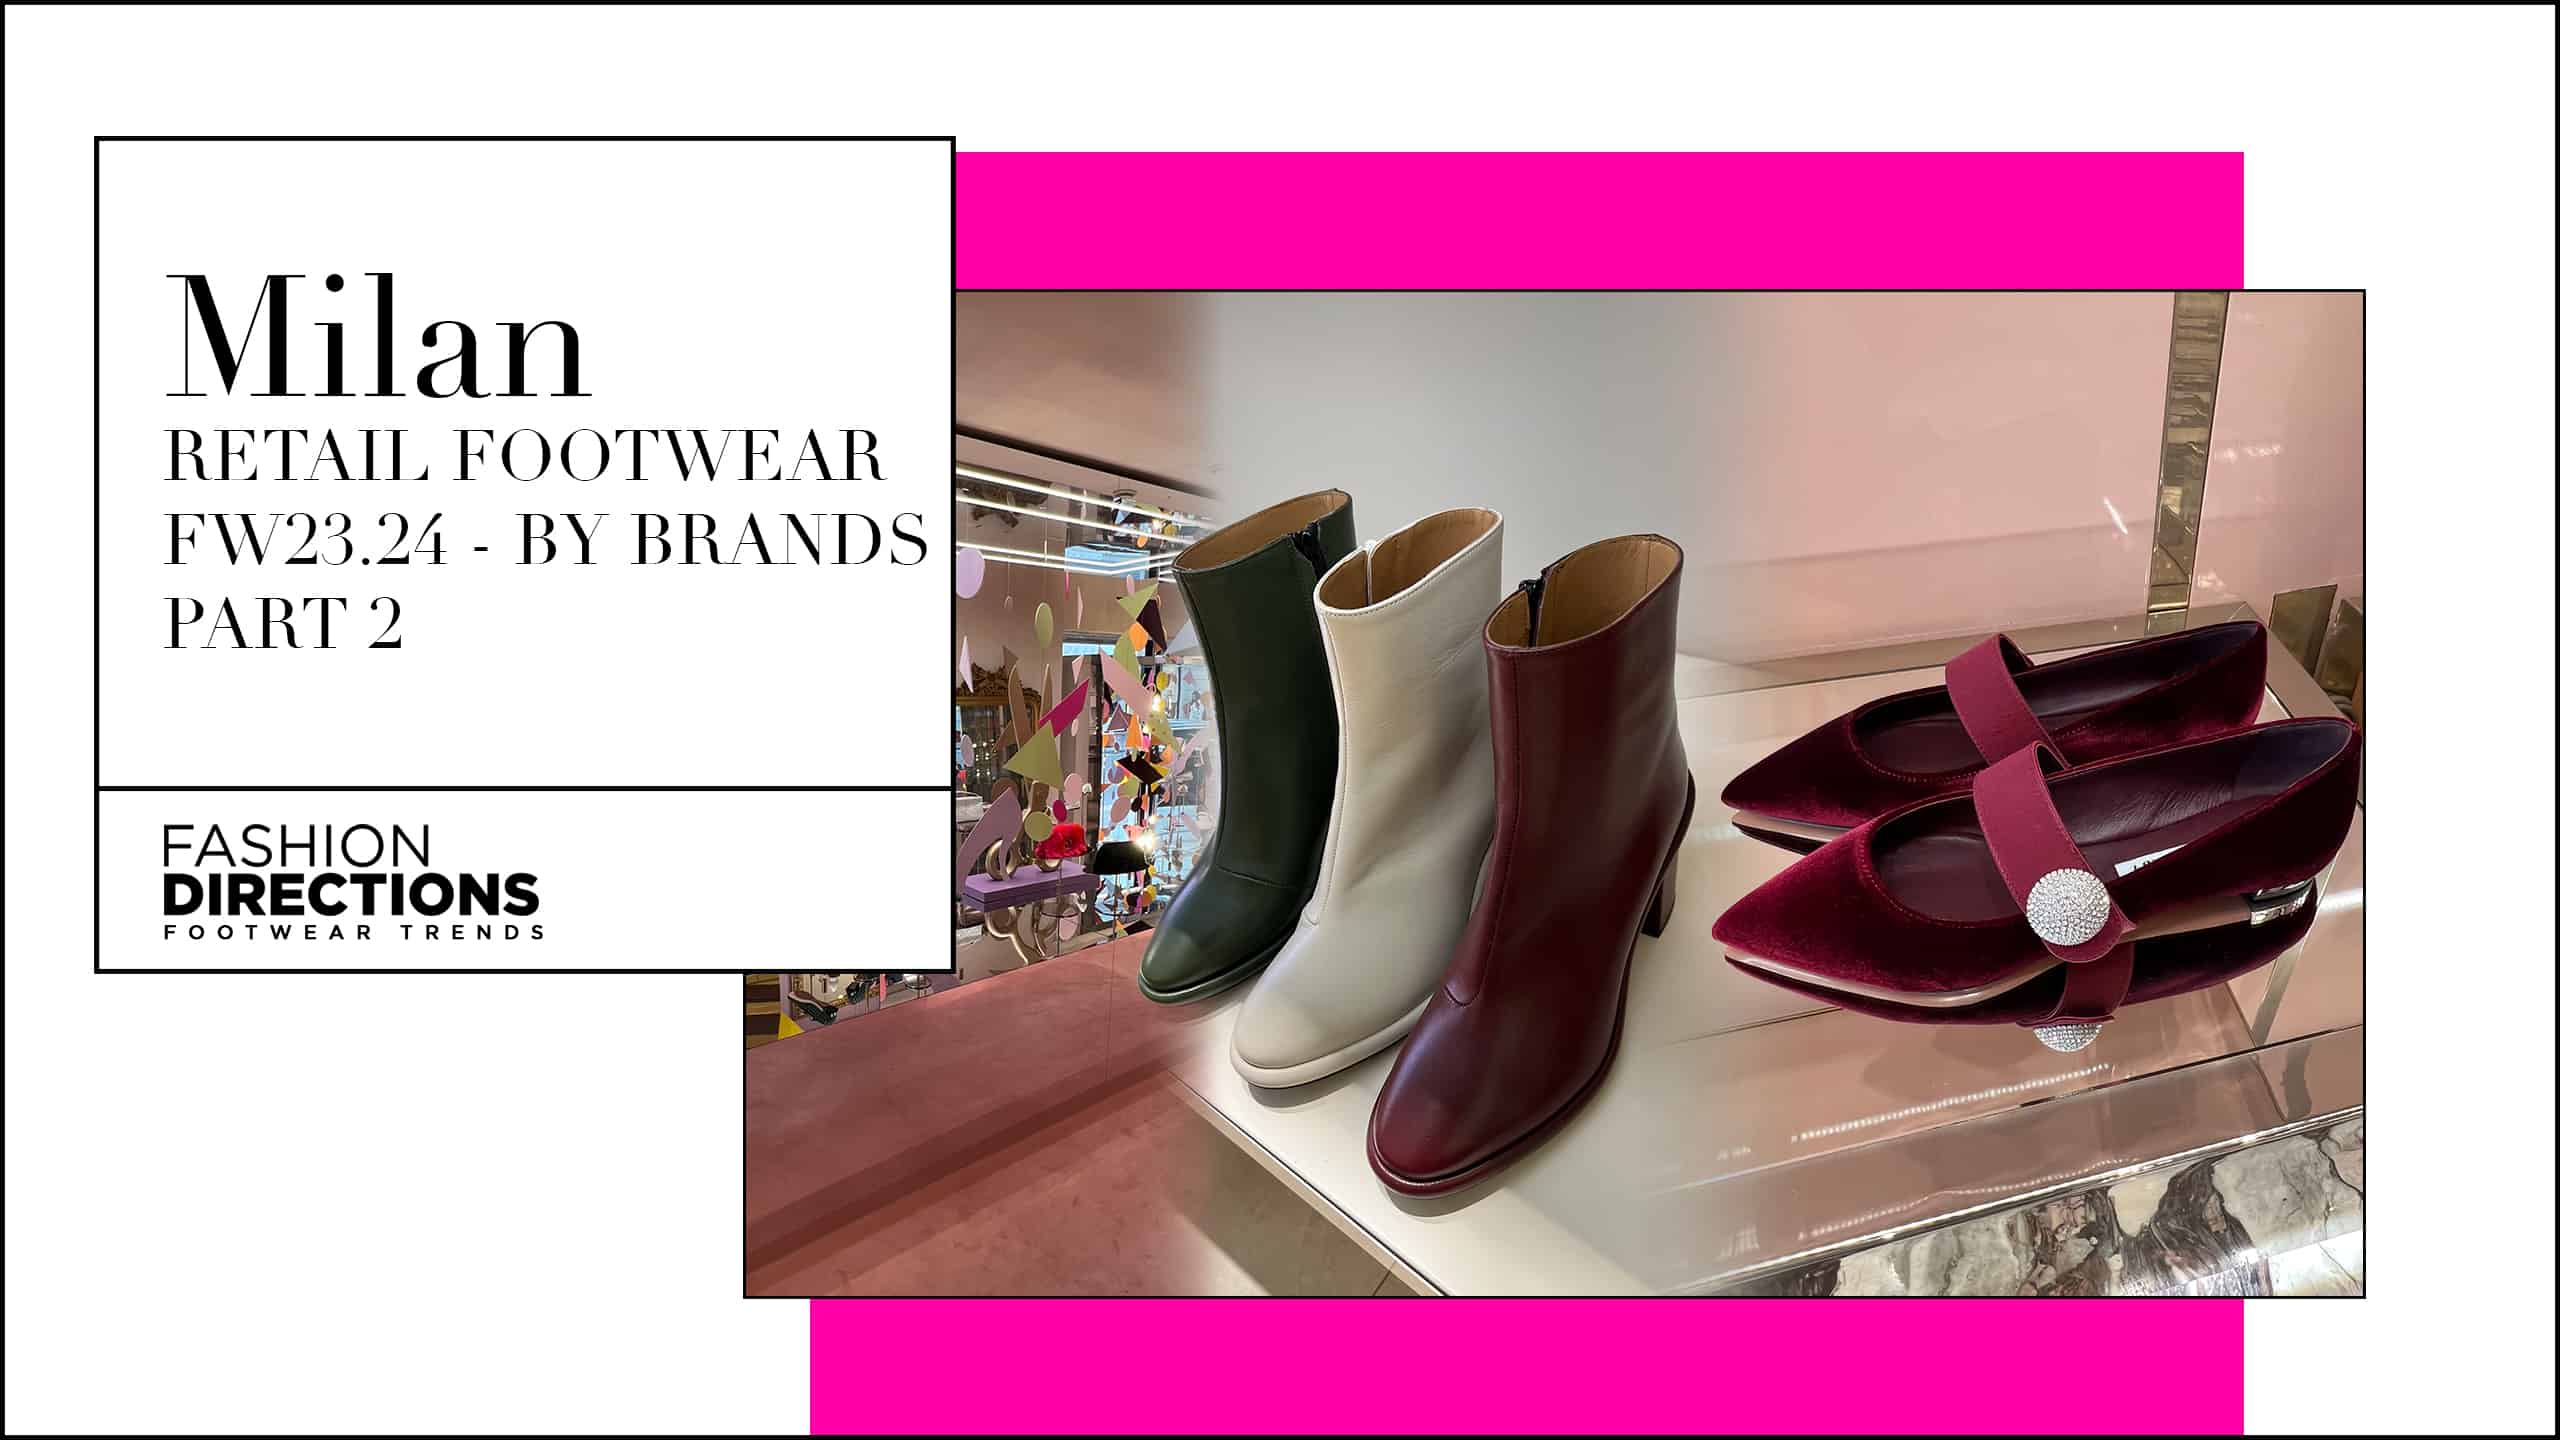 Milan Retail Footwear fw23.24 By Brands Part 2